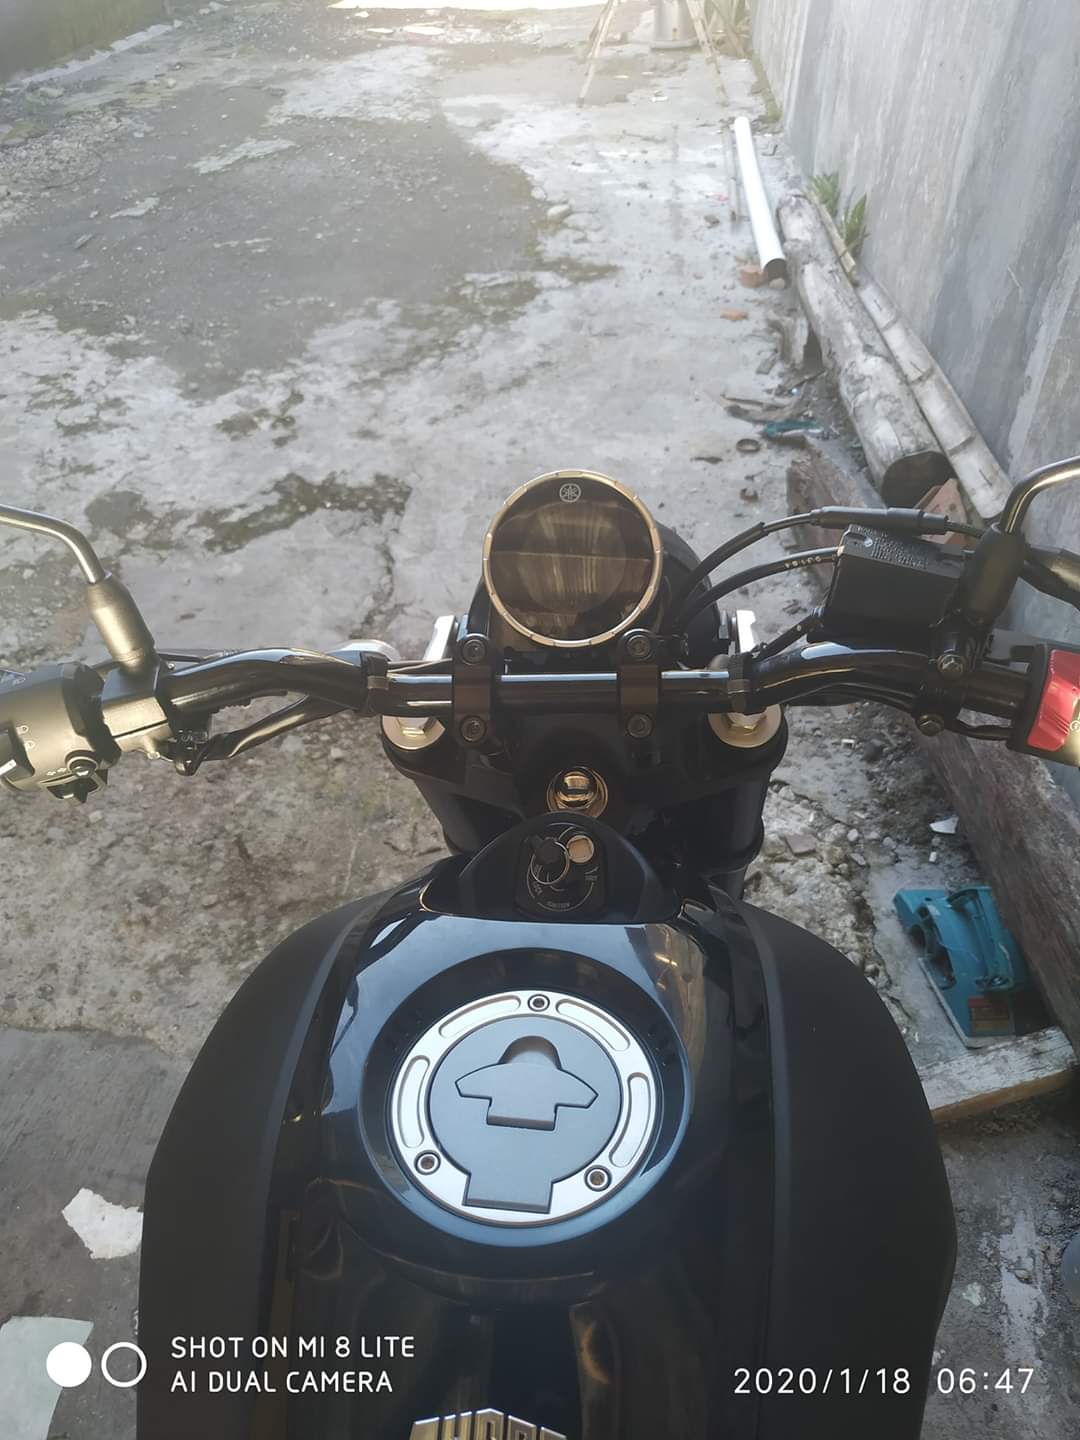 Pasang Stang Byson Masih Kurang Nyaman Ganti Lagi Stang MT15 Di Yamaha XSR Bikers Indonesia